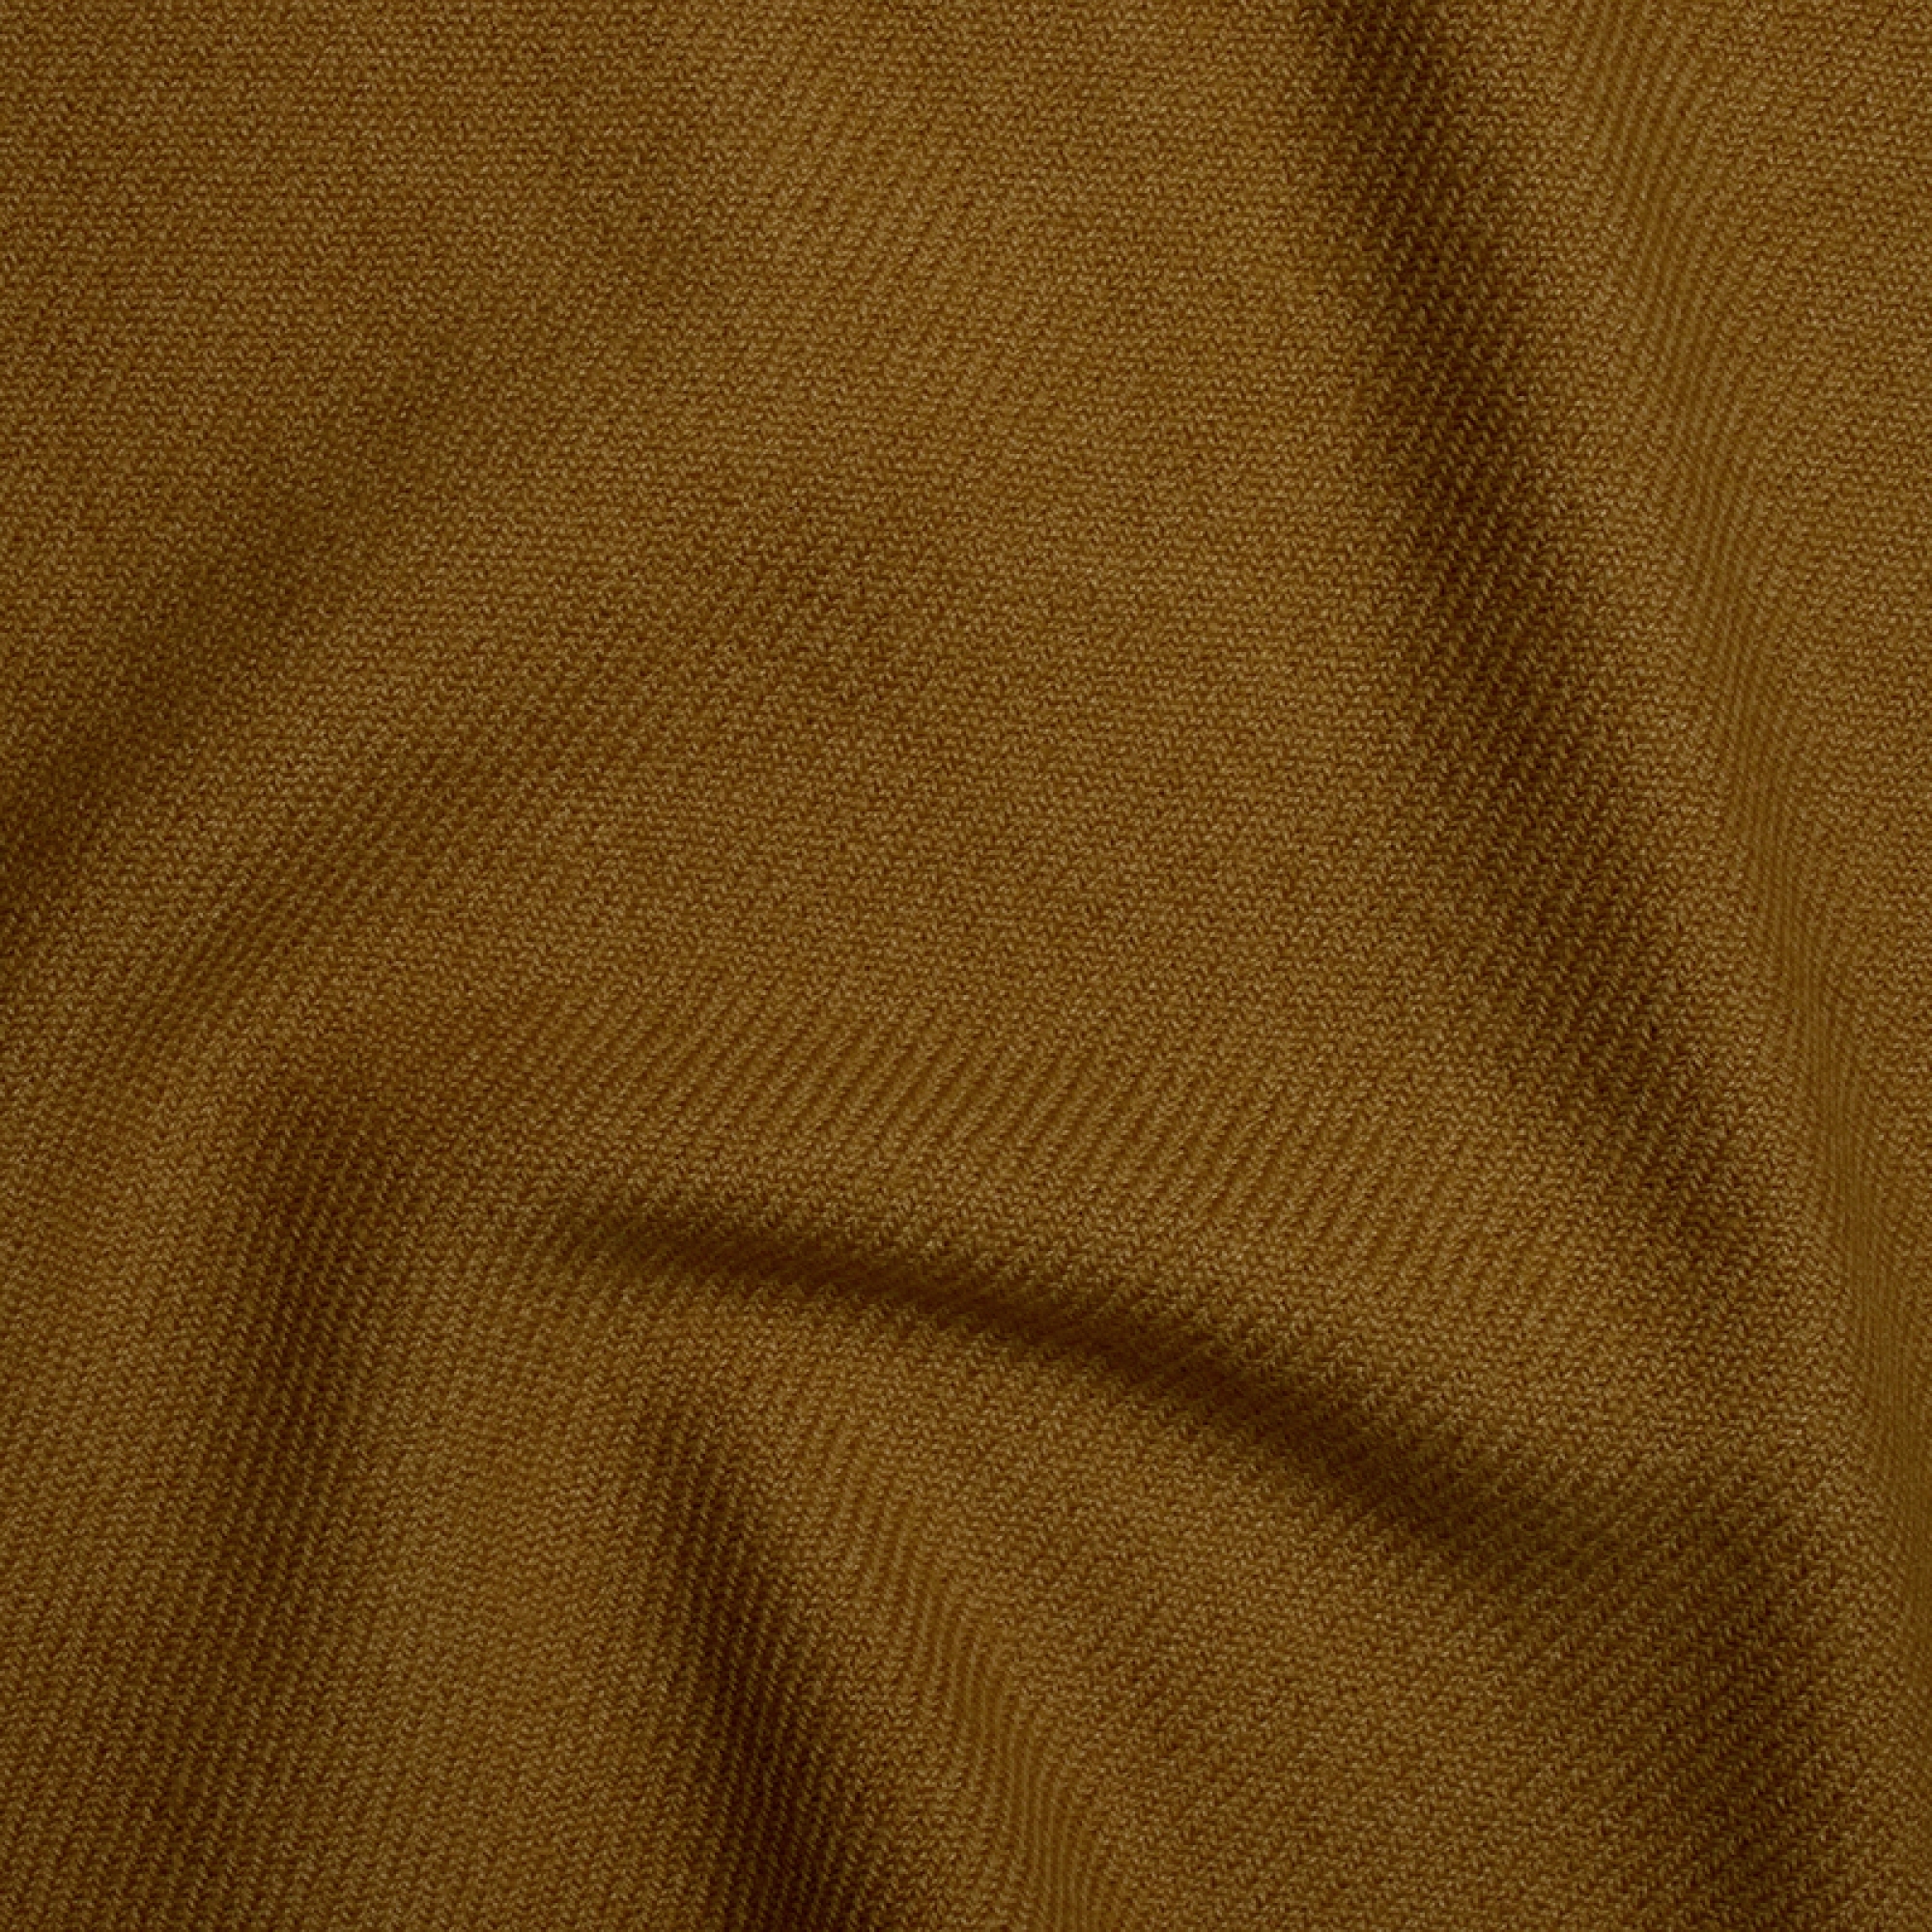 Cashmere accessories blanket toodoo plain l 220 x 220 peanut butter 220x220cm